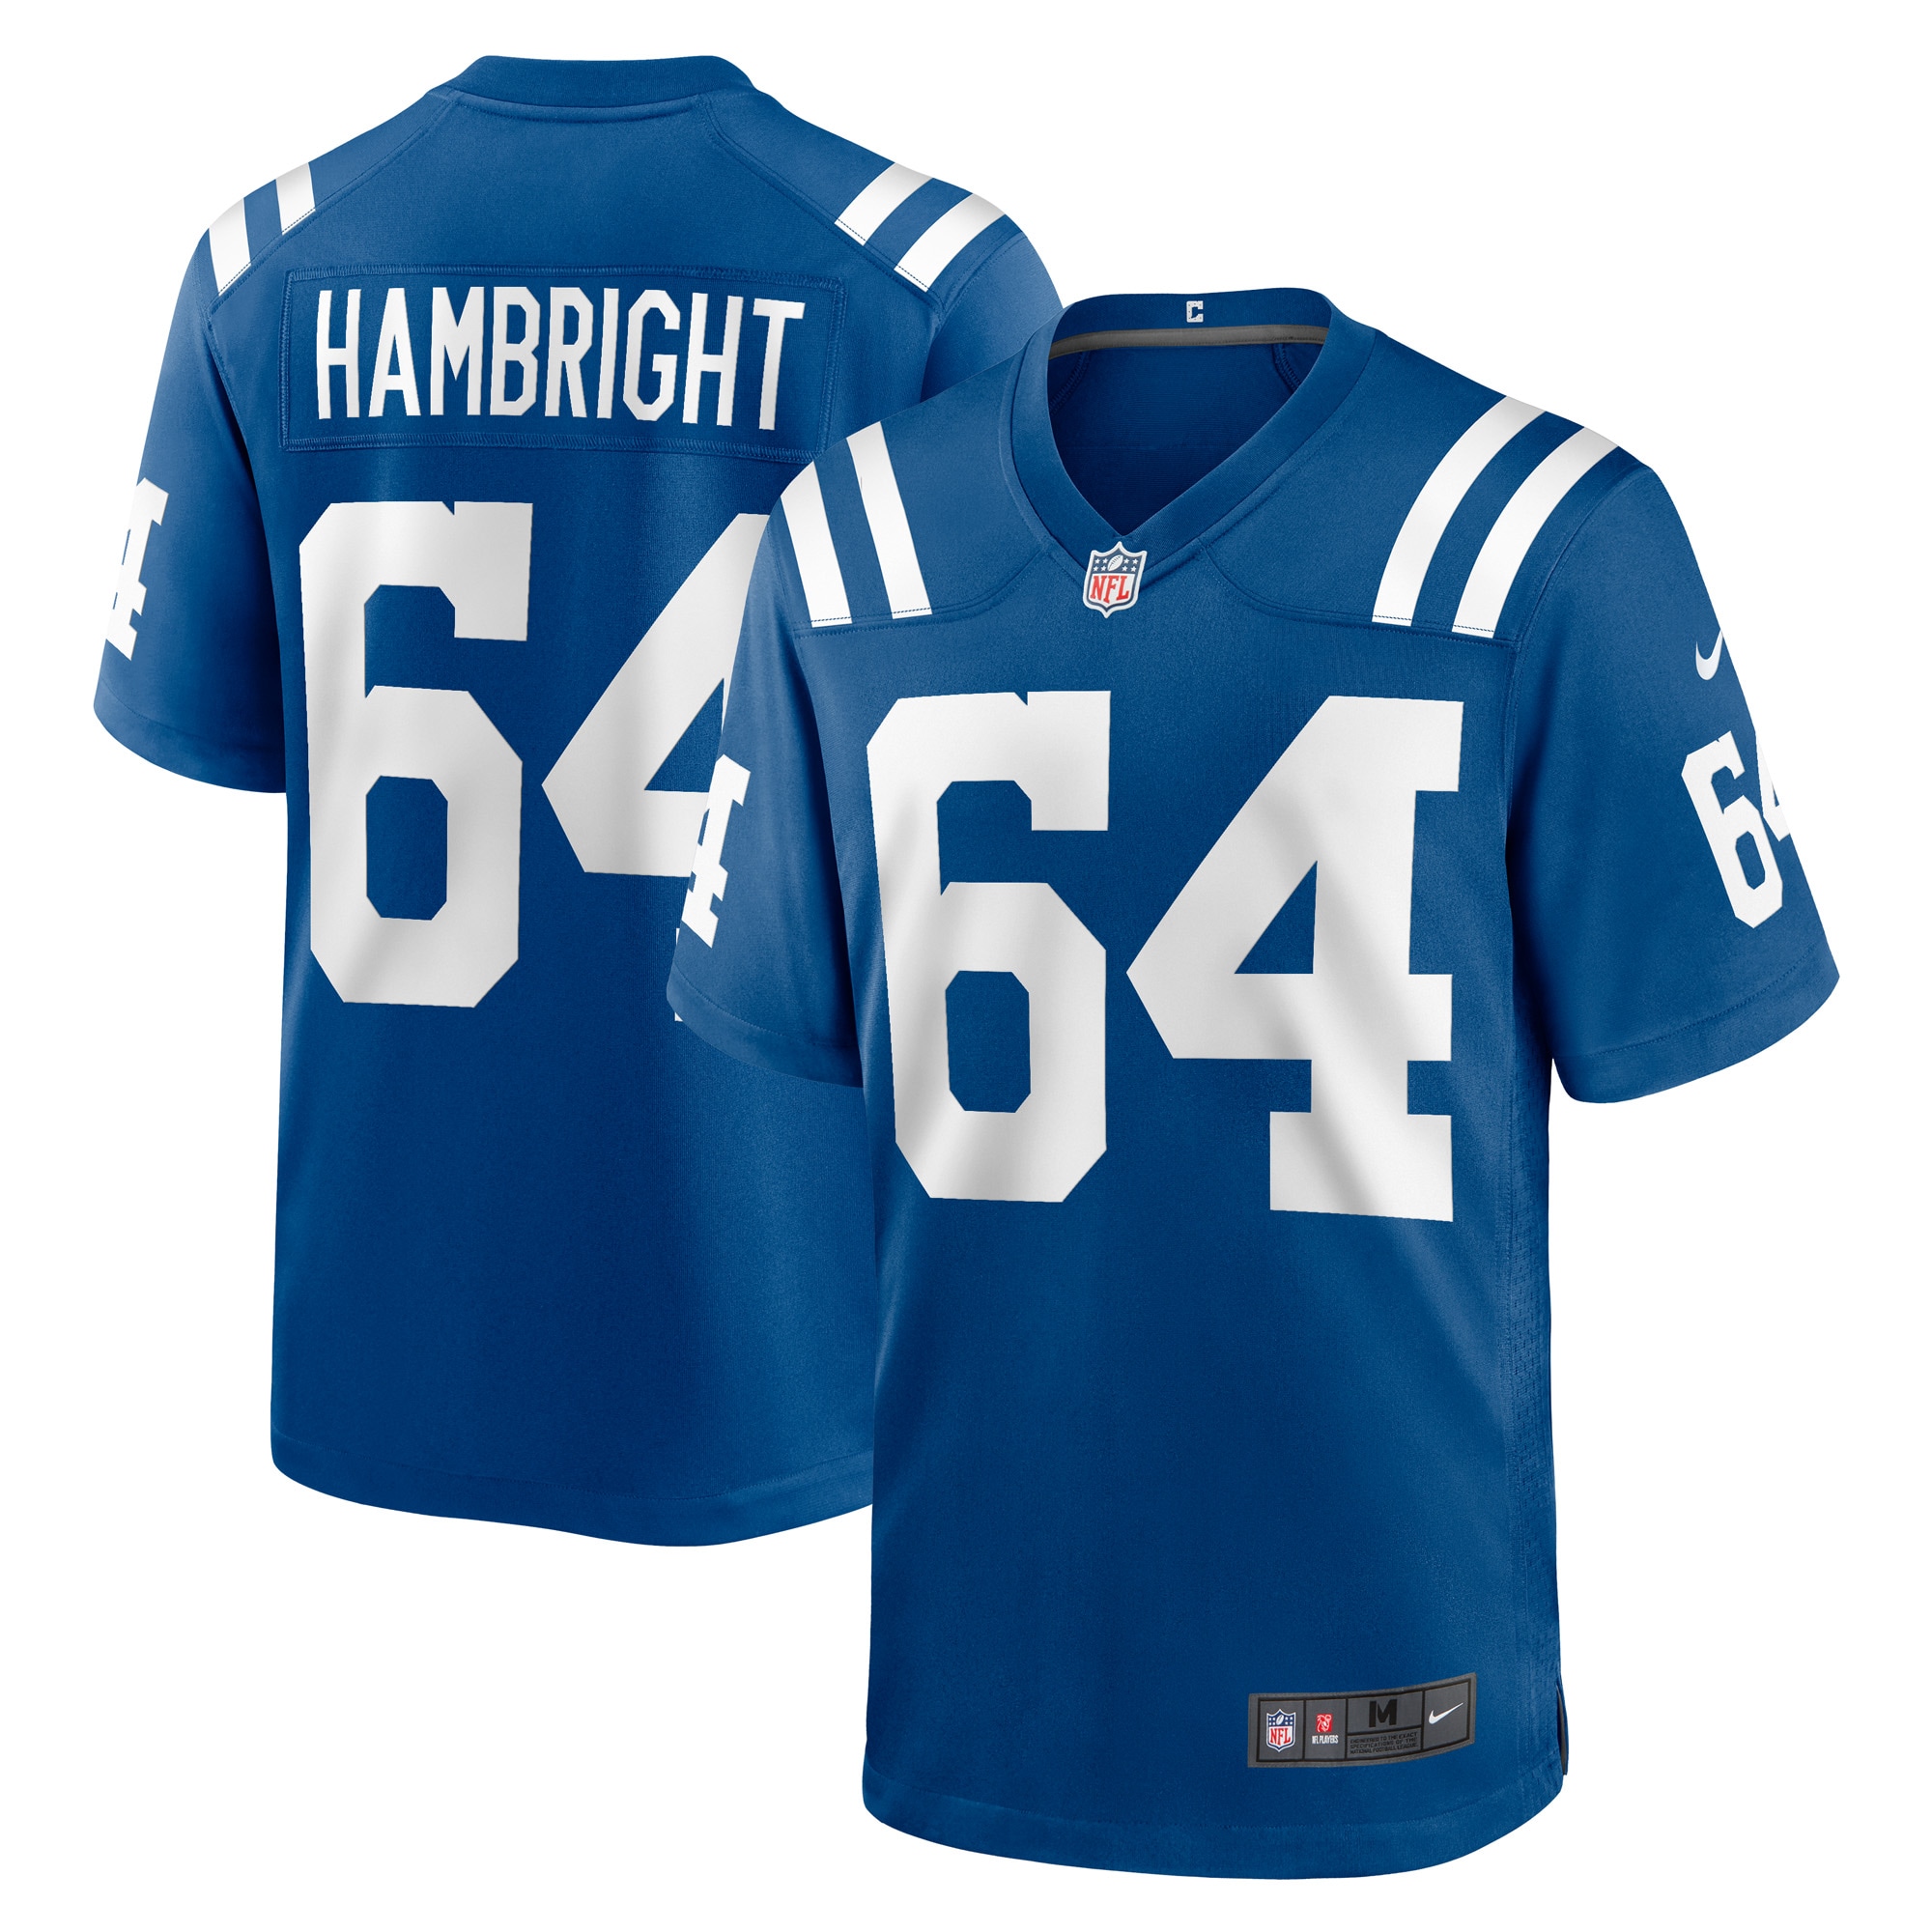 Men's Indianapolis Colts Jerseys Royal Arlington Hambright Game Player Style